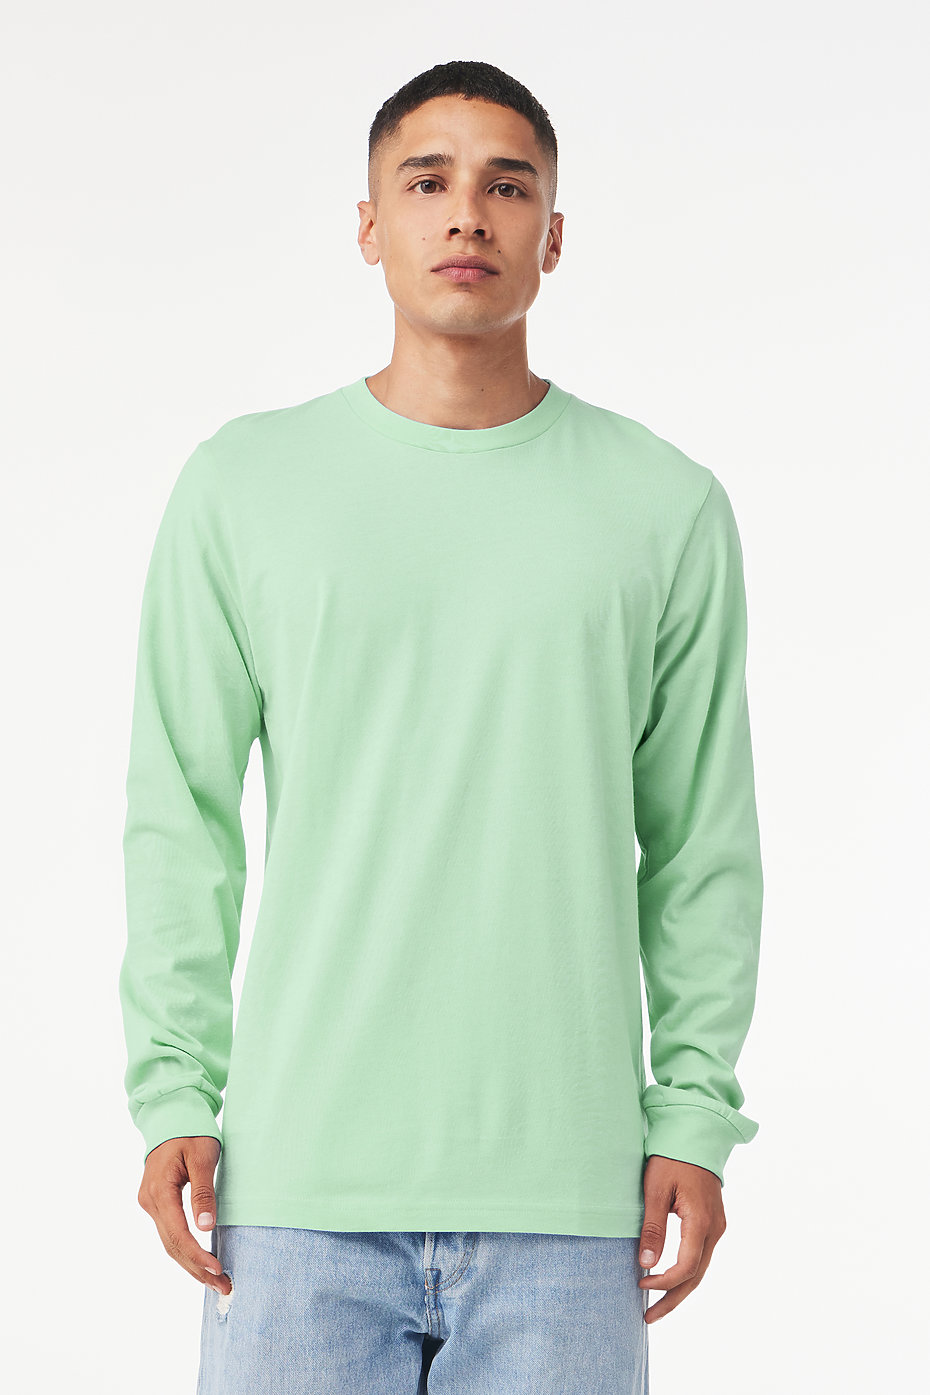 Mens Long Sleeve T Shirts | Unisex Jersey T Shirt | Wholesale